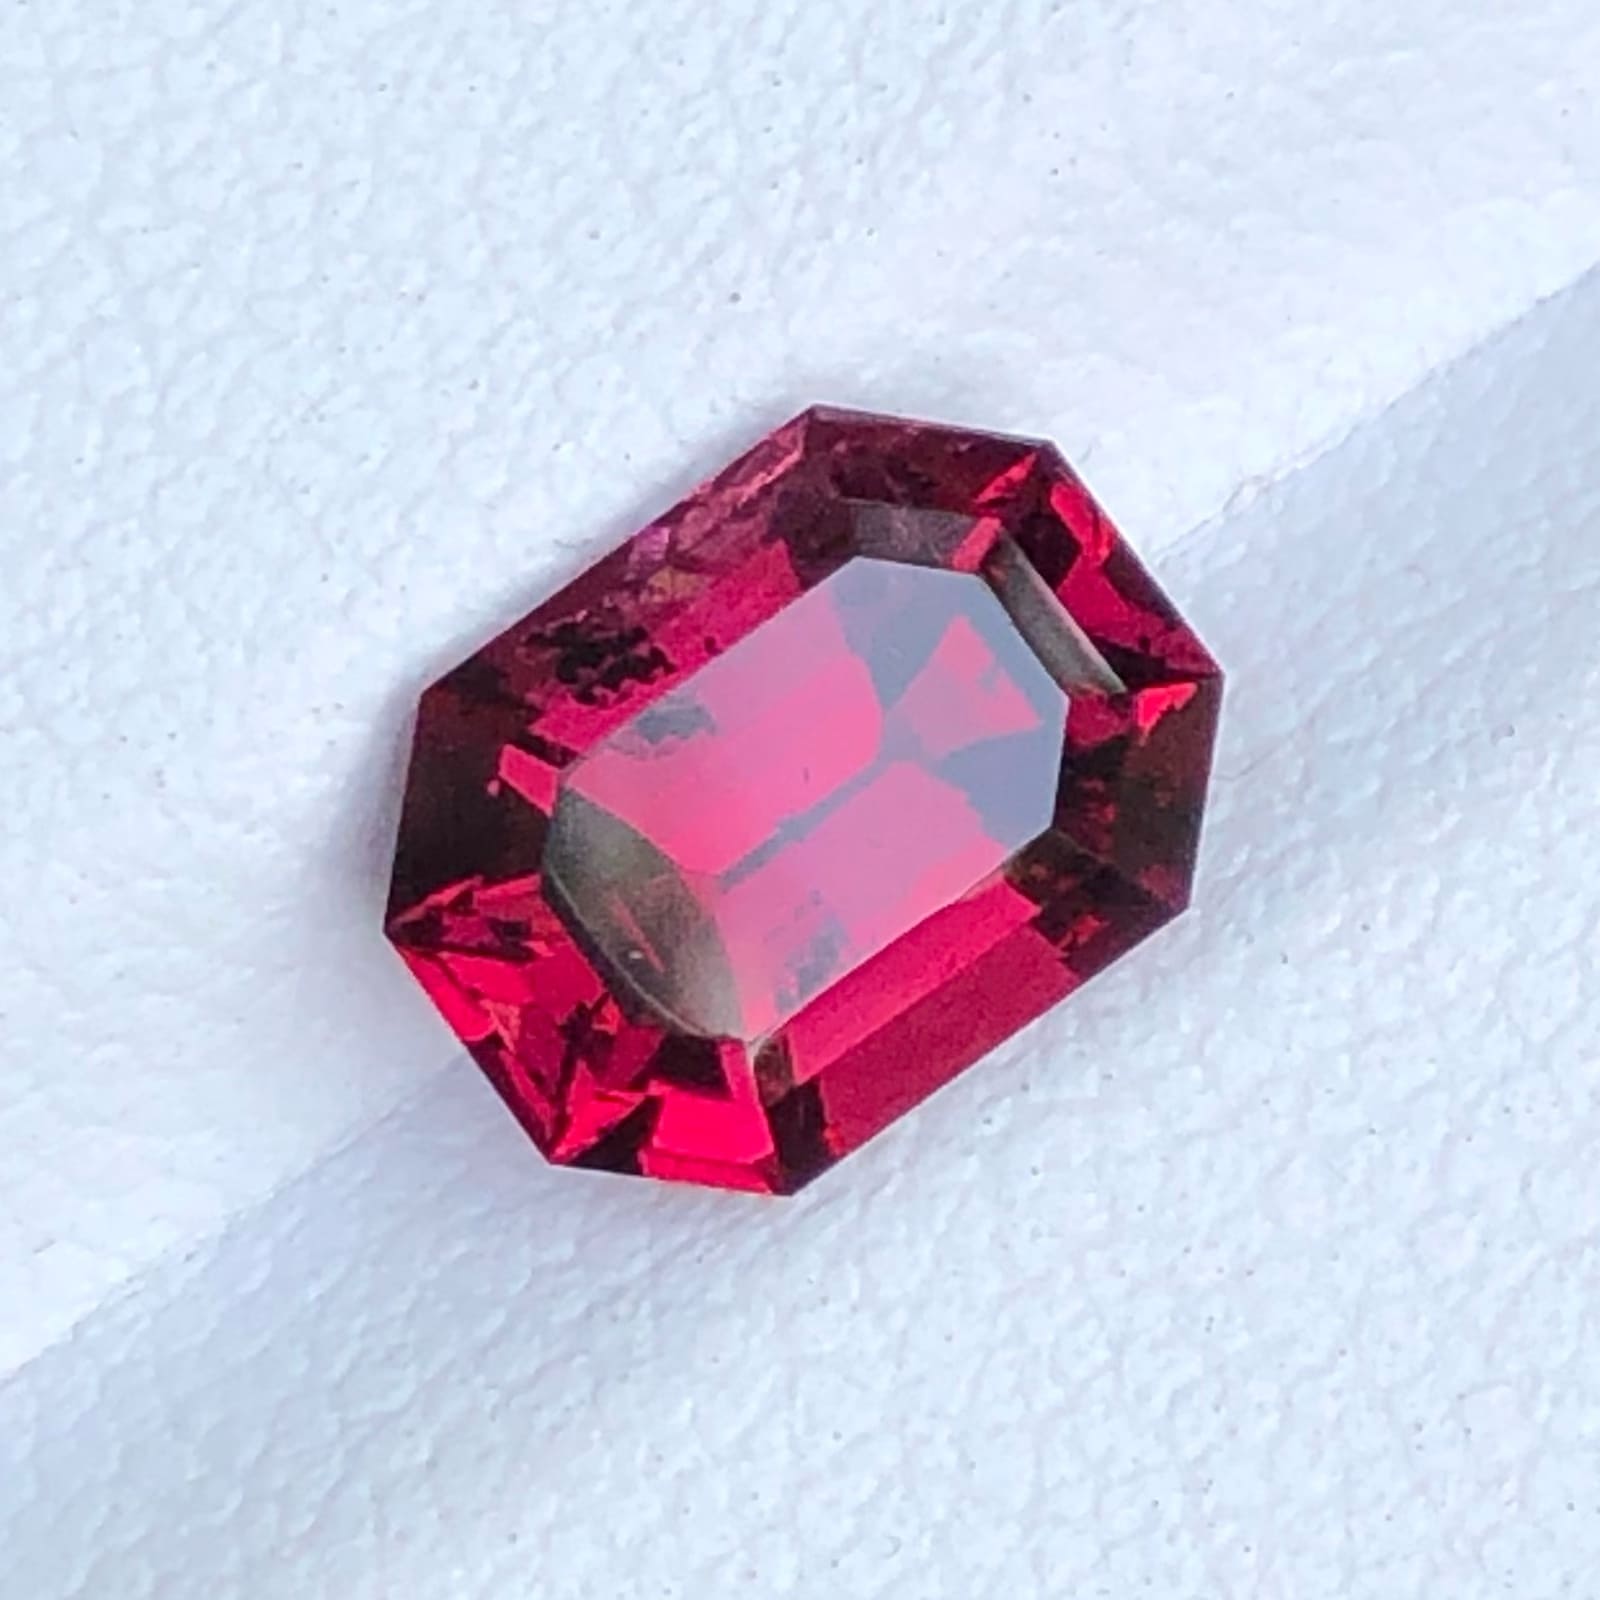 2.65 carats Faceted Raspberry Rhodolite Garnet